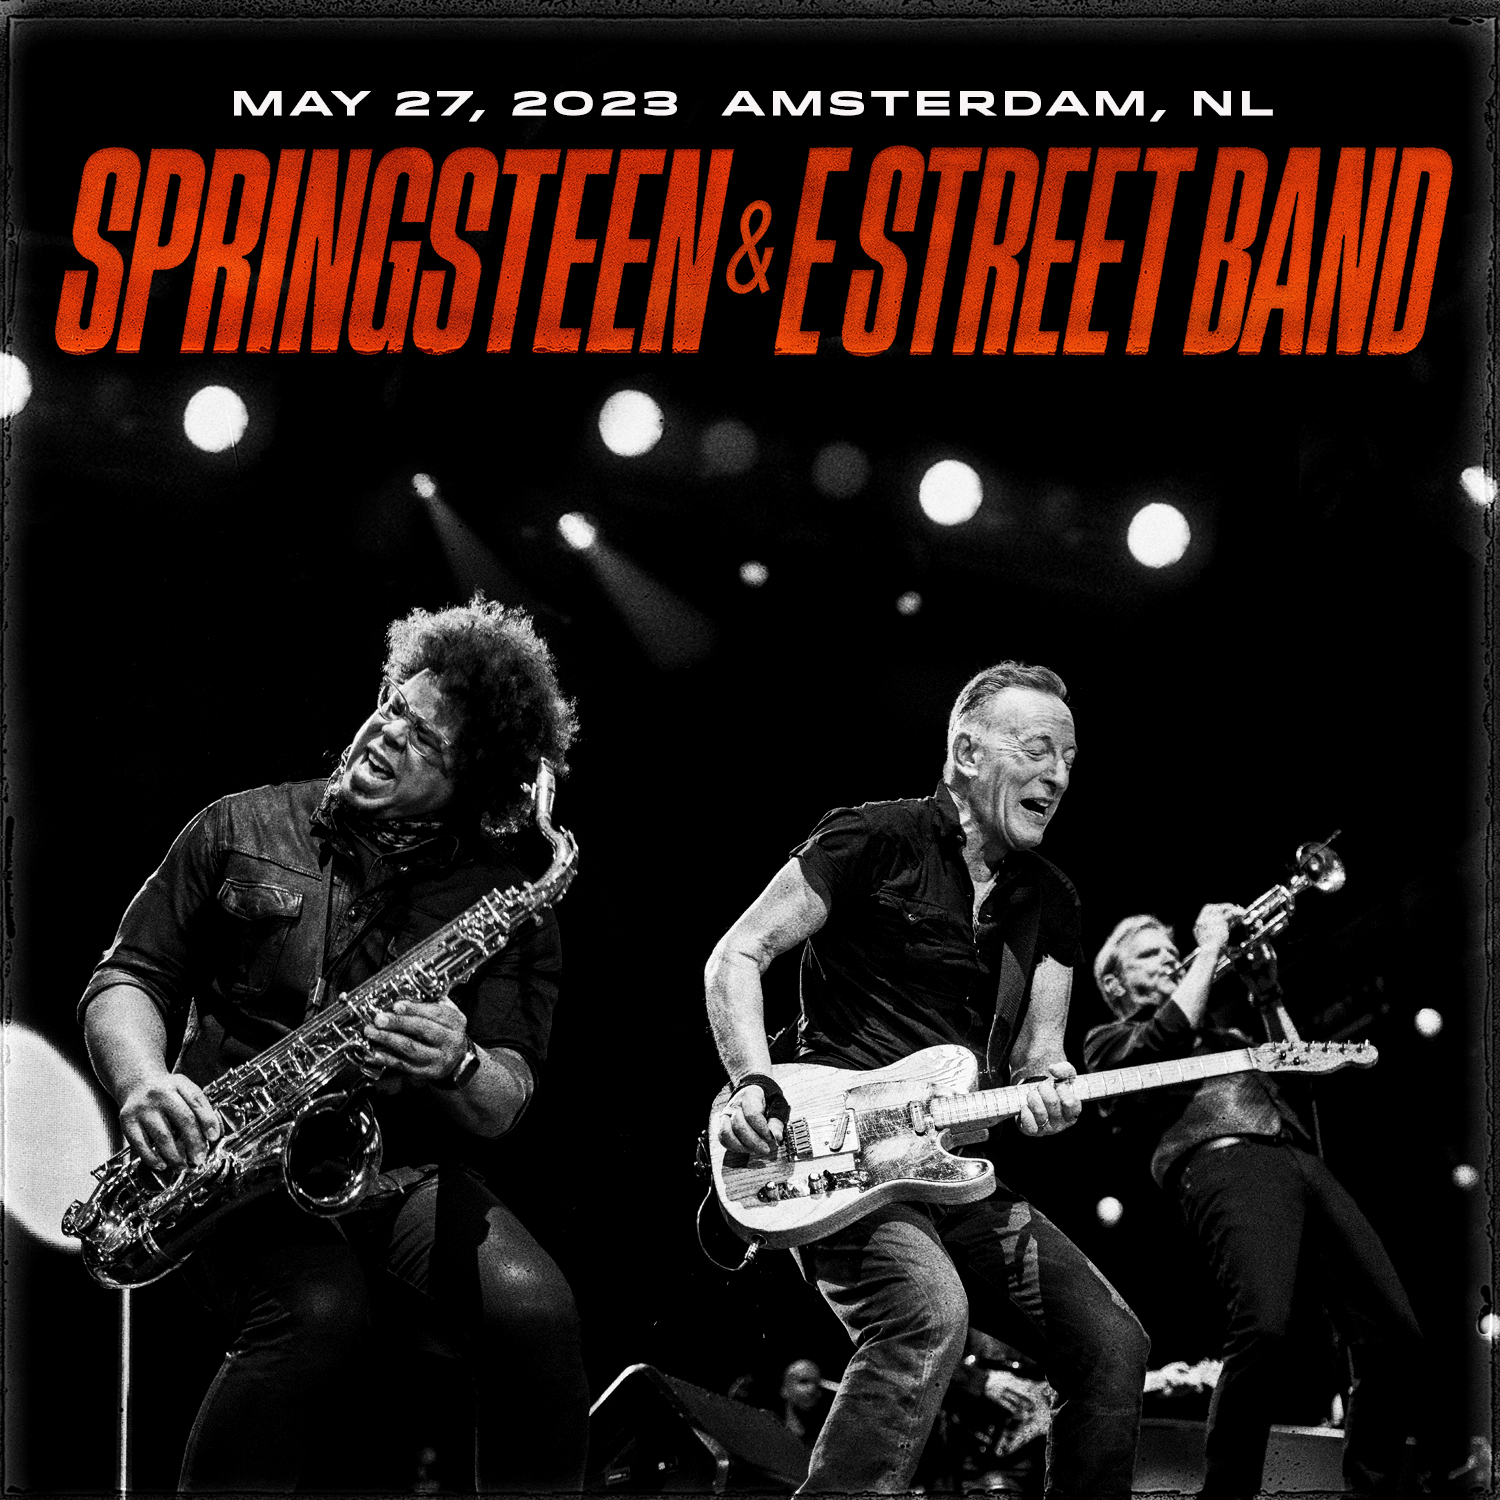 Bruce Springsteen & The E Street Band – 2023 – 27 mei, Johan Cruyff Arena, Amsterdam, NL